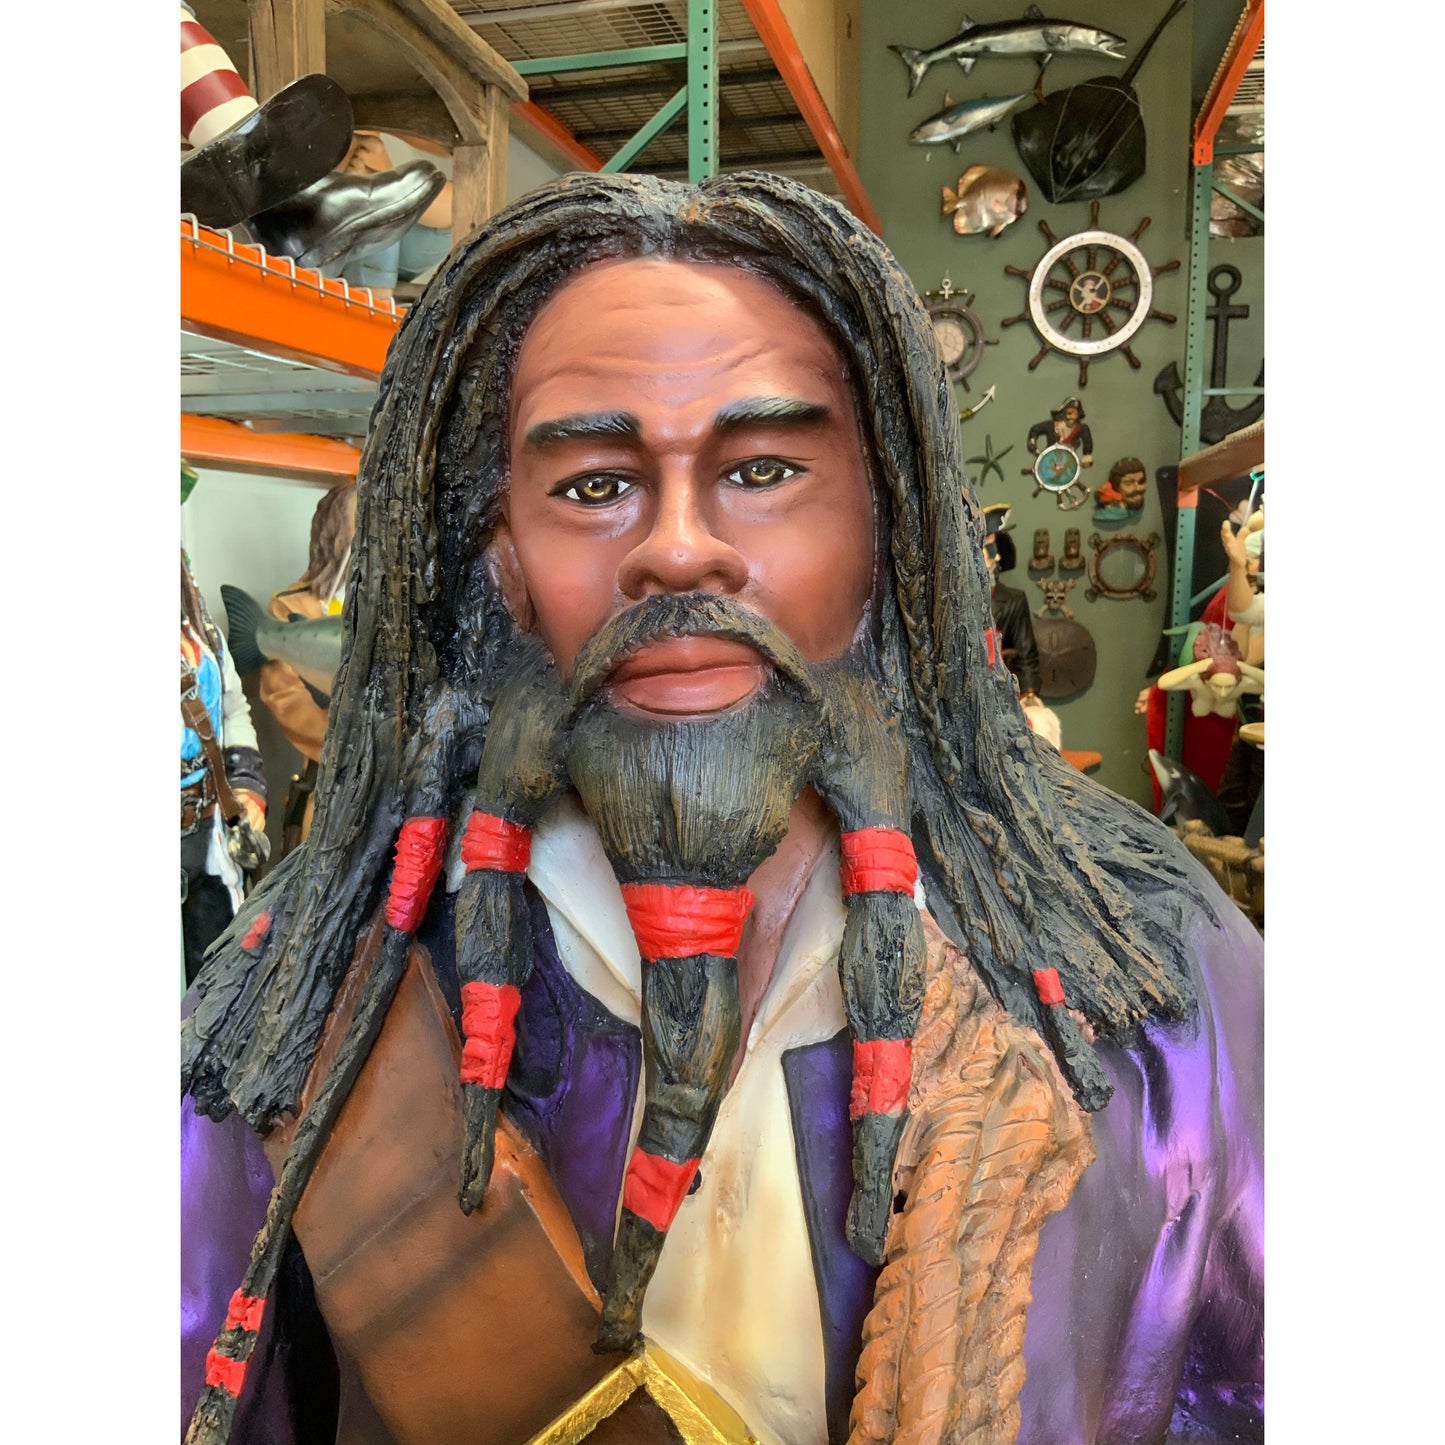 Caribbean Pirate Life Size Statue - LM Treasures Prop Rentals 